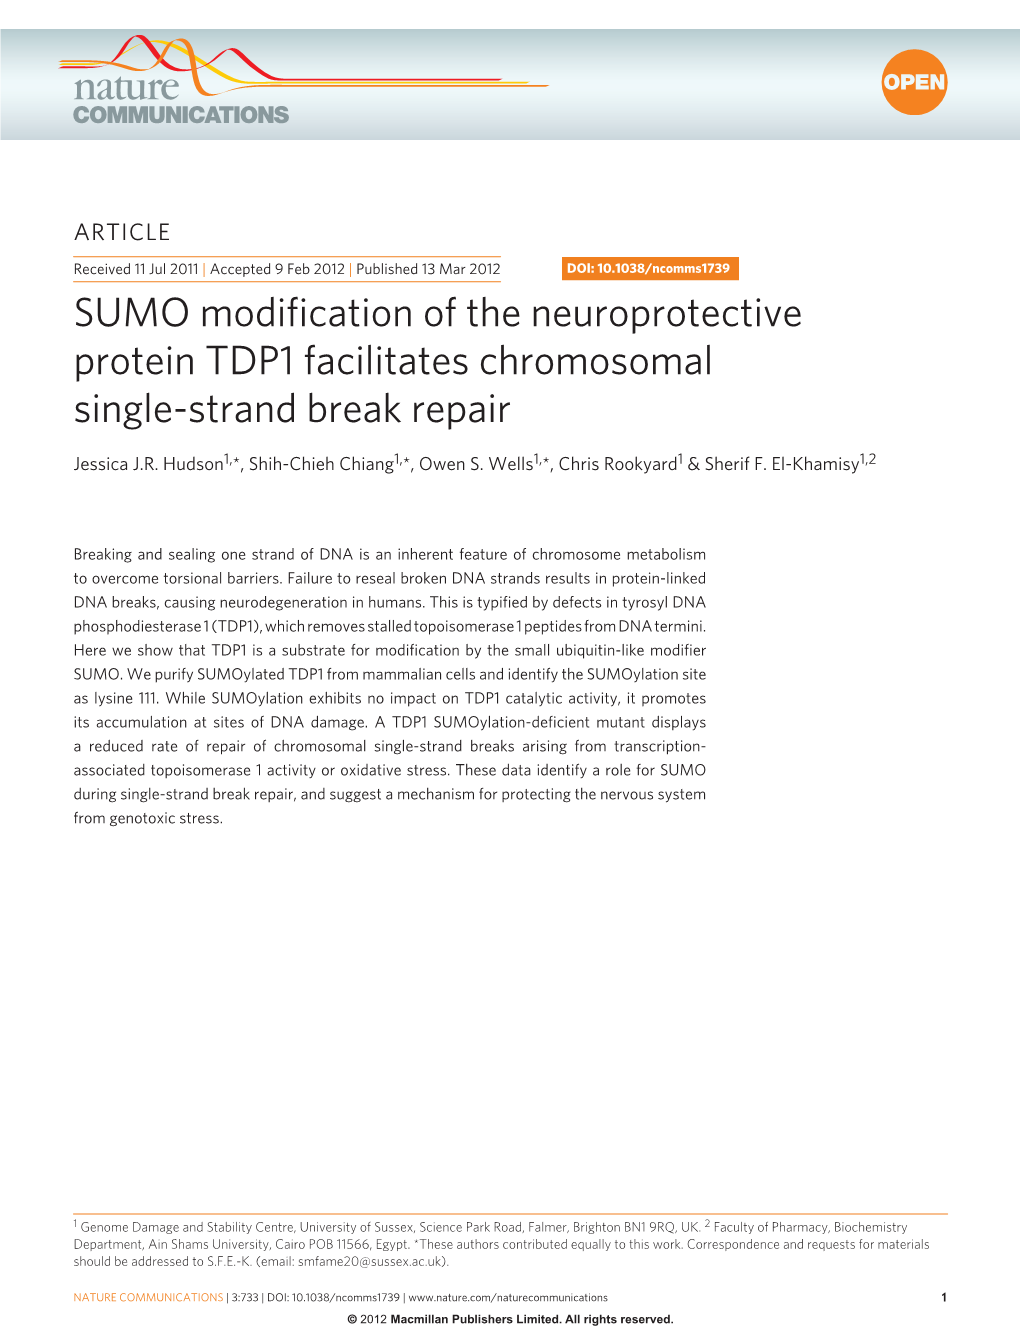 SUMO Modification of the Neuroprotective Protein TDP1 Facilitates Chromosomal Single-Strand Break Repair